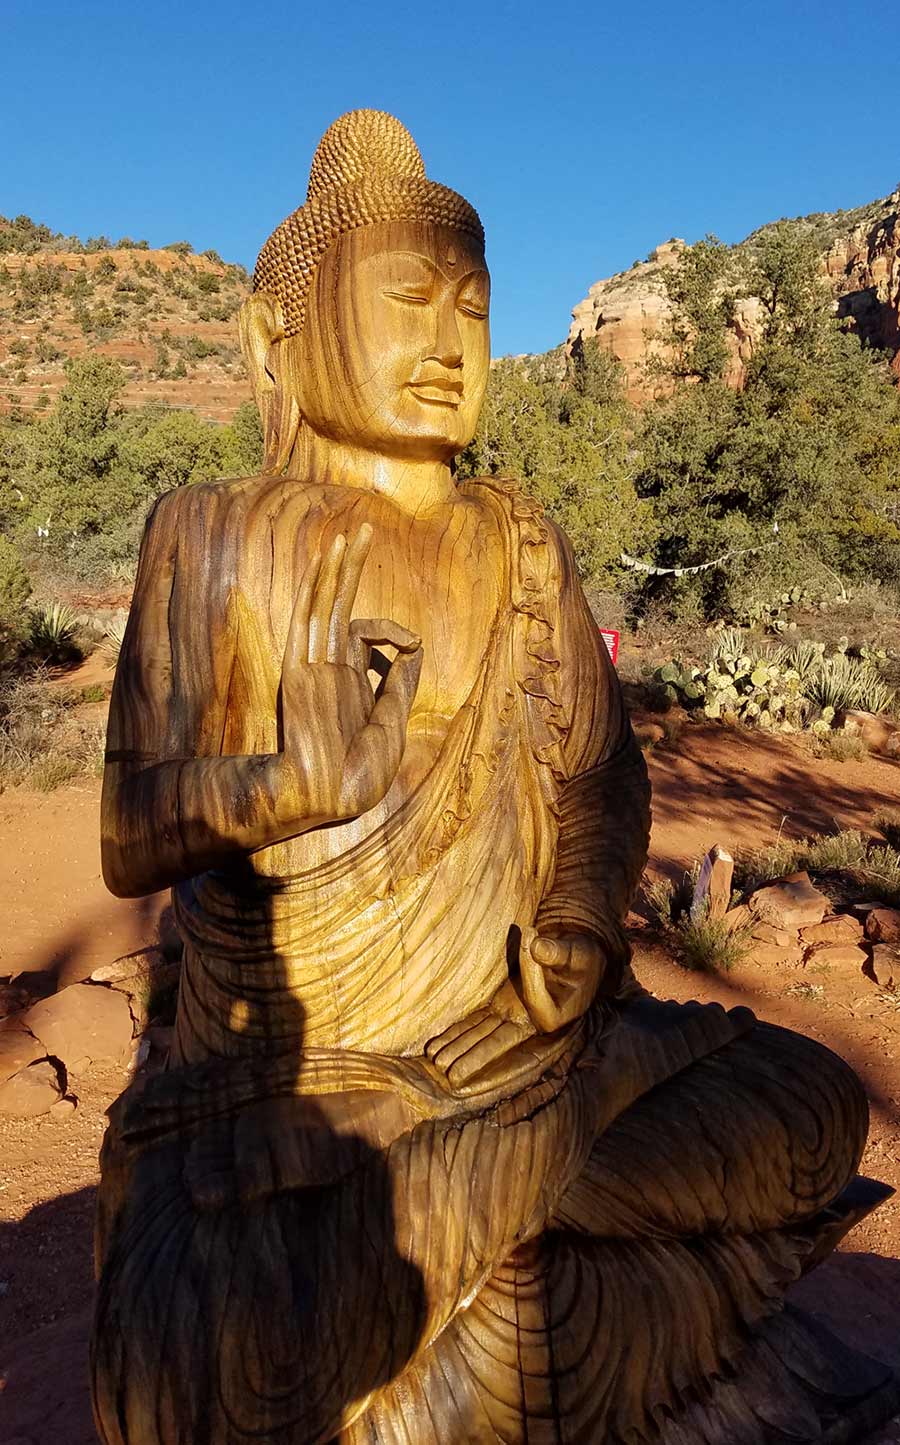 Carved Wooden Shakyamuni statue at Amitabha stupa site in Sedona Arizona